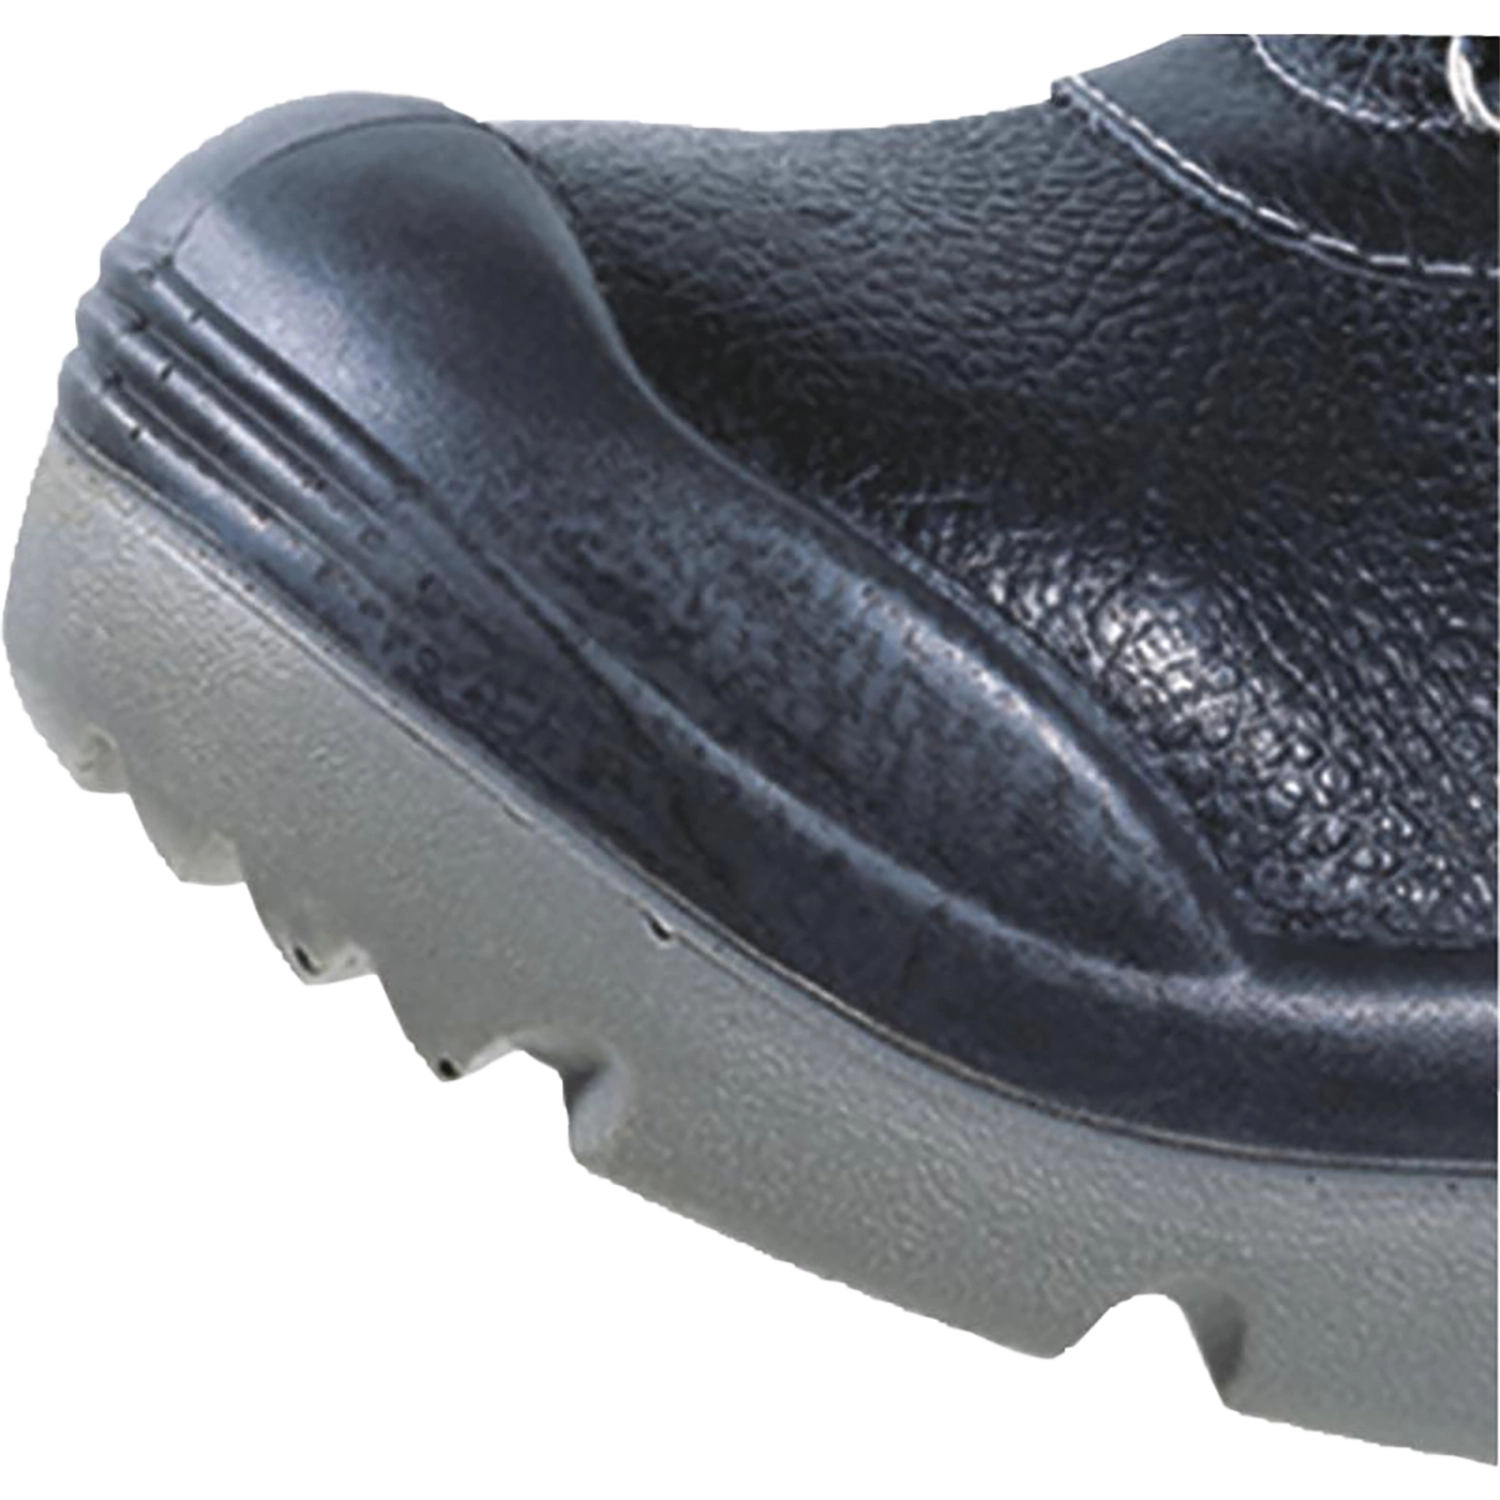 Chaussures montantes - X-Large - Sault S3 - noir - taille 42